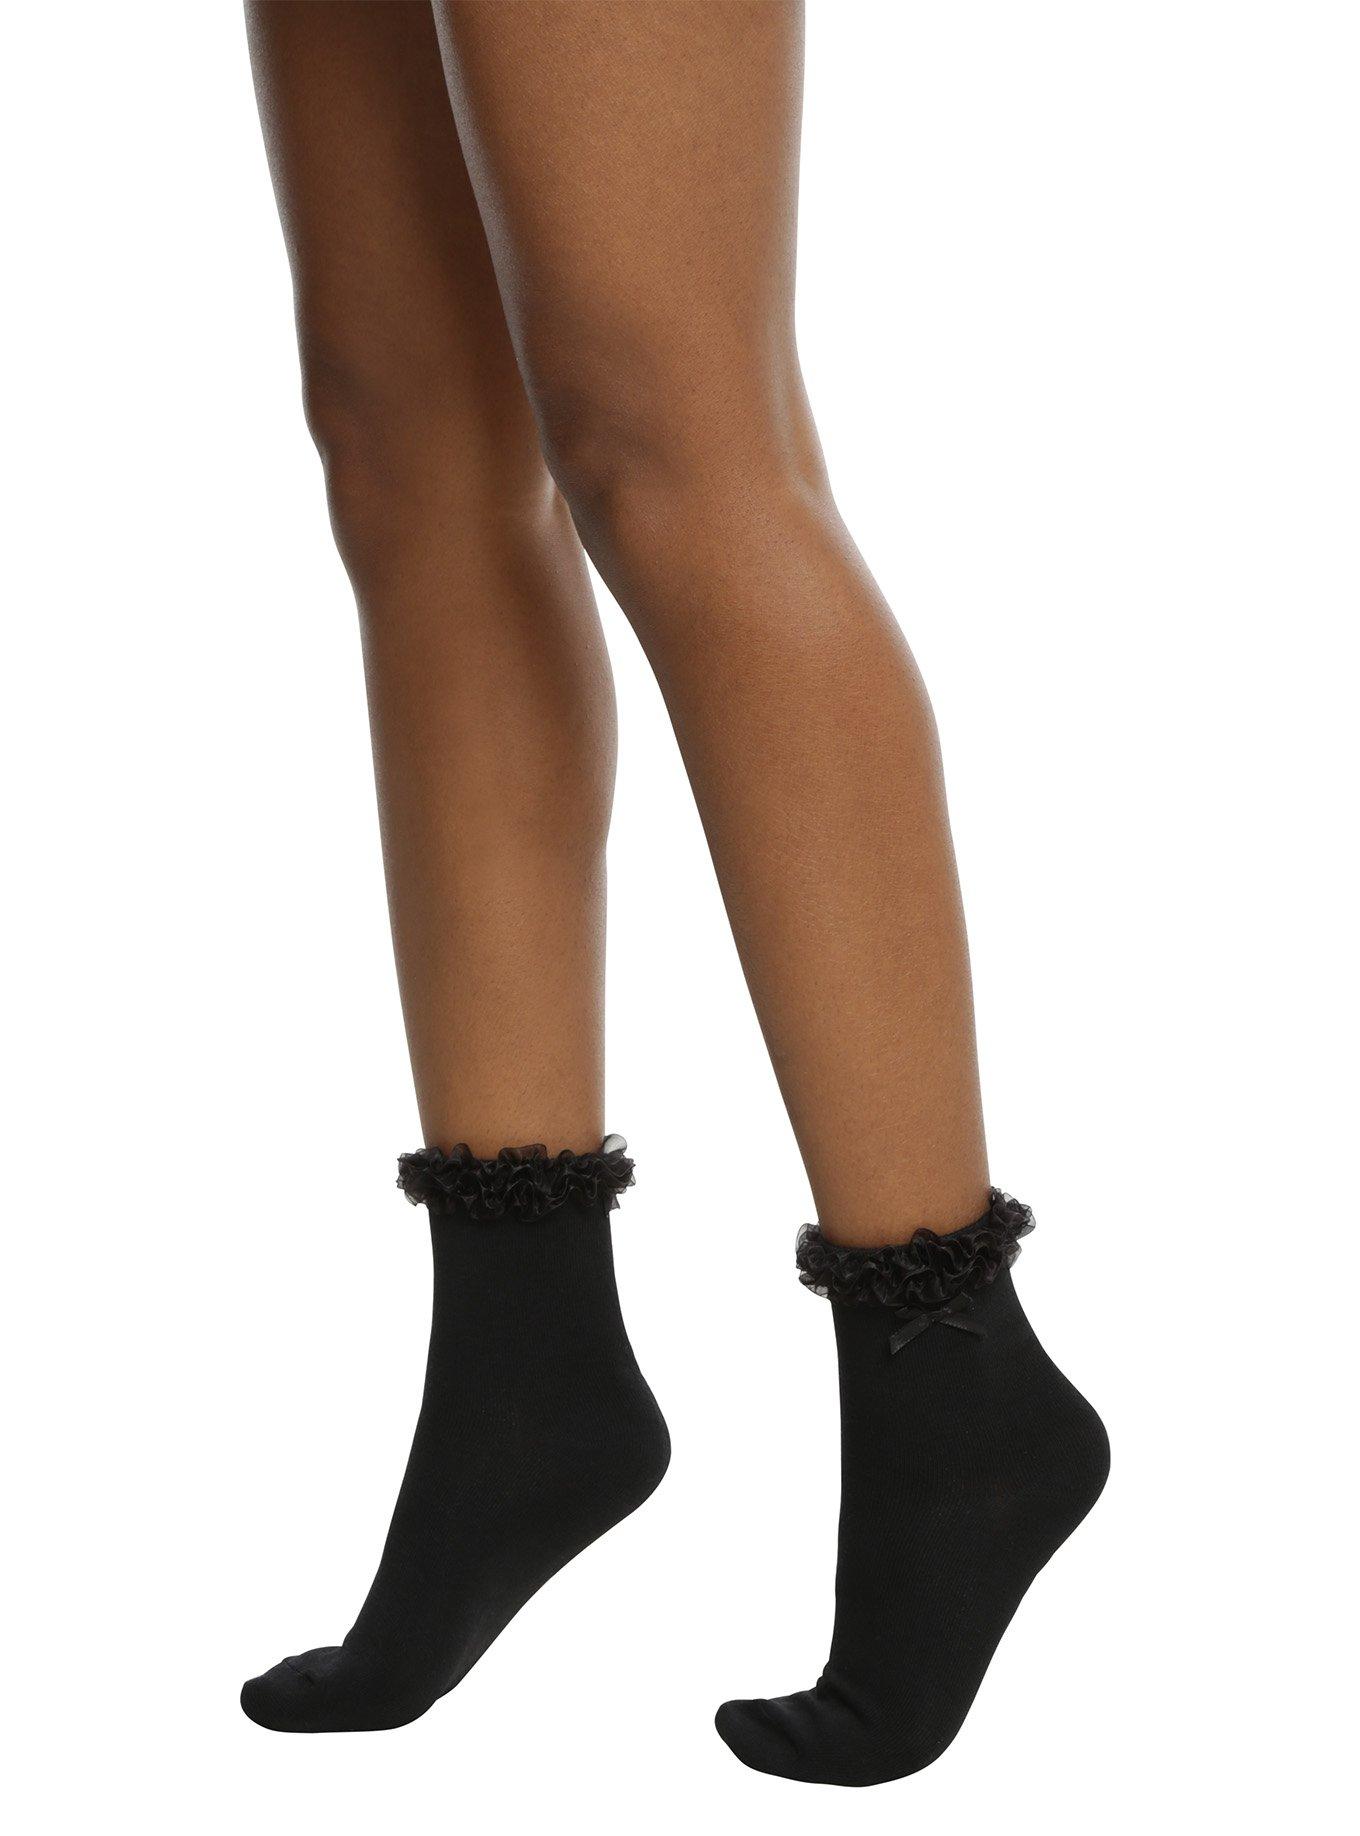 Blackheart Black Ruffle Ankle Socks | Hot Topic